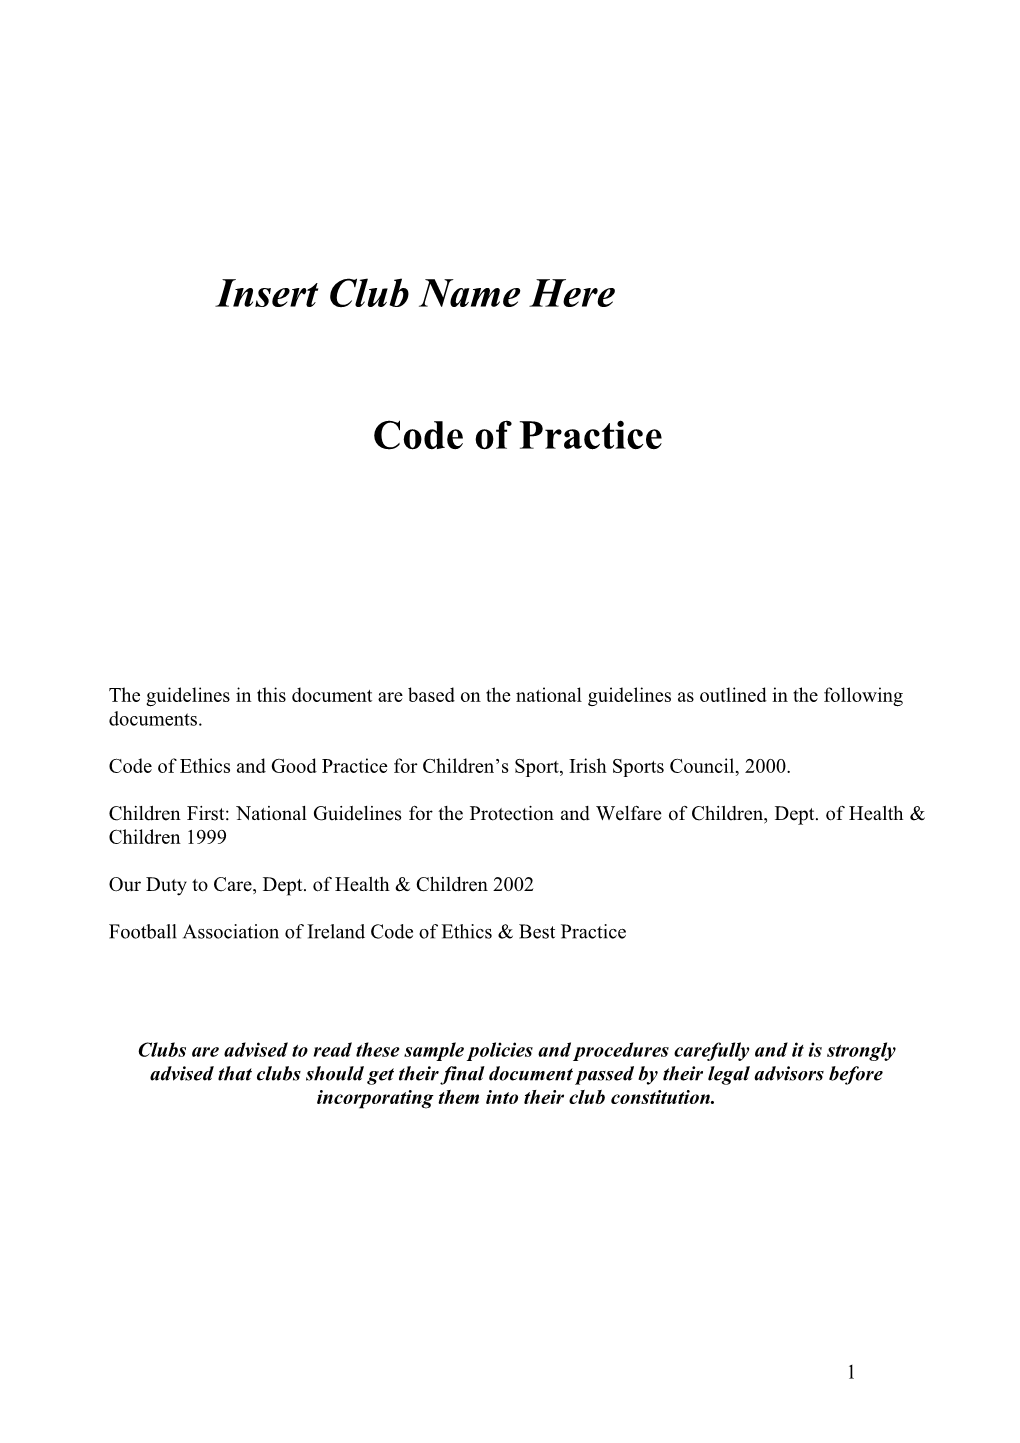 Code of Ethics & Good Practice